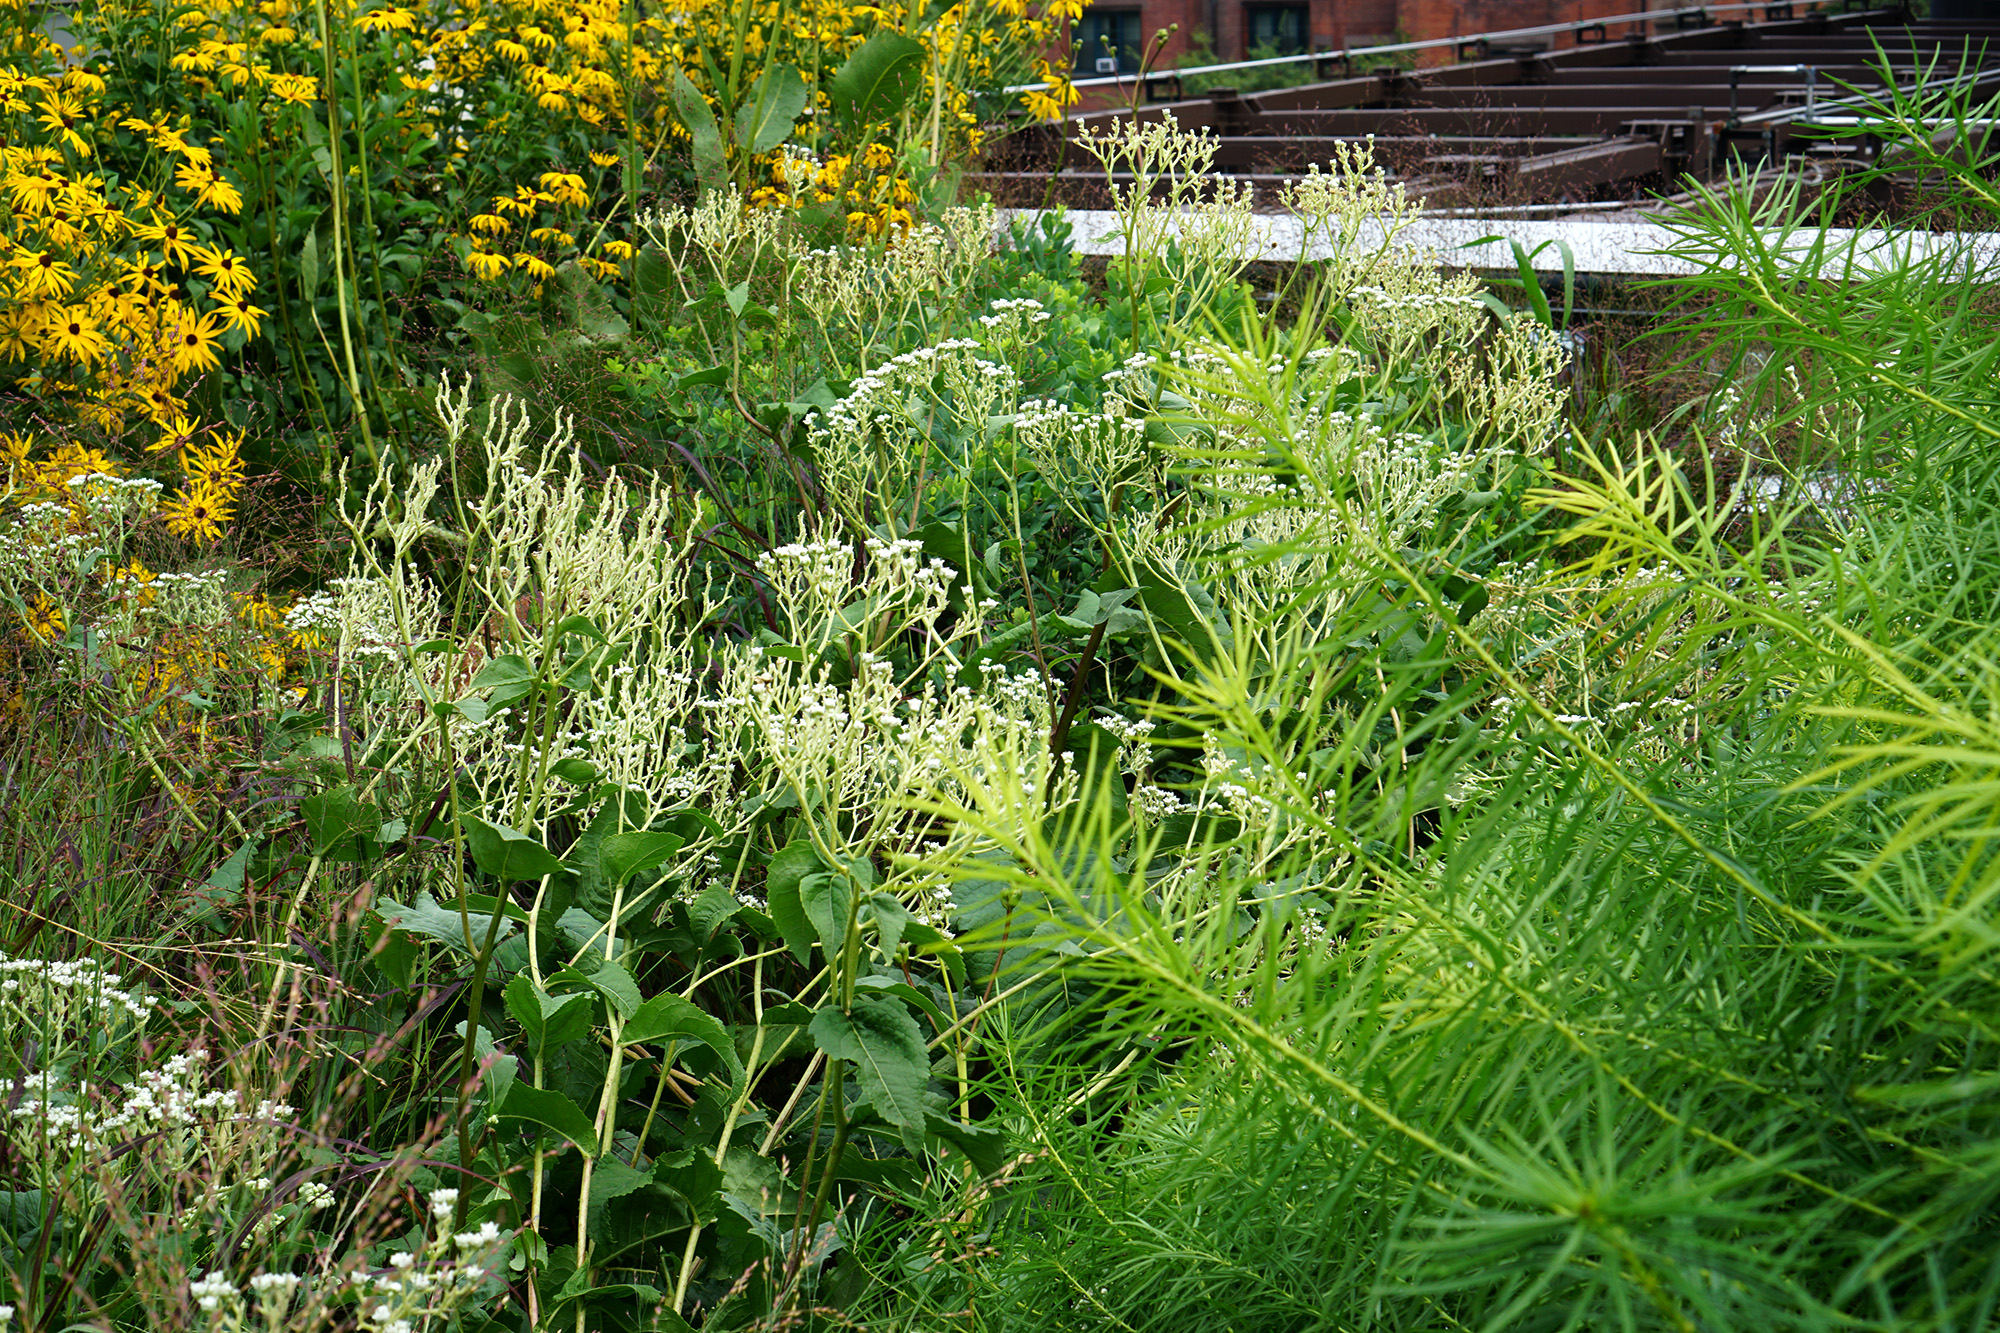 The High Line, New York City / Darker than Green